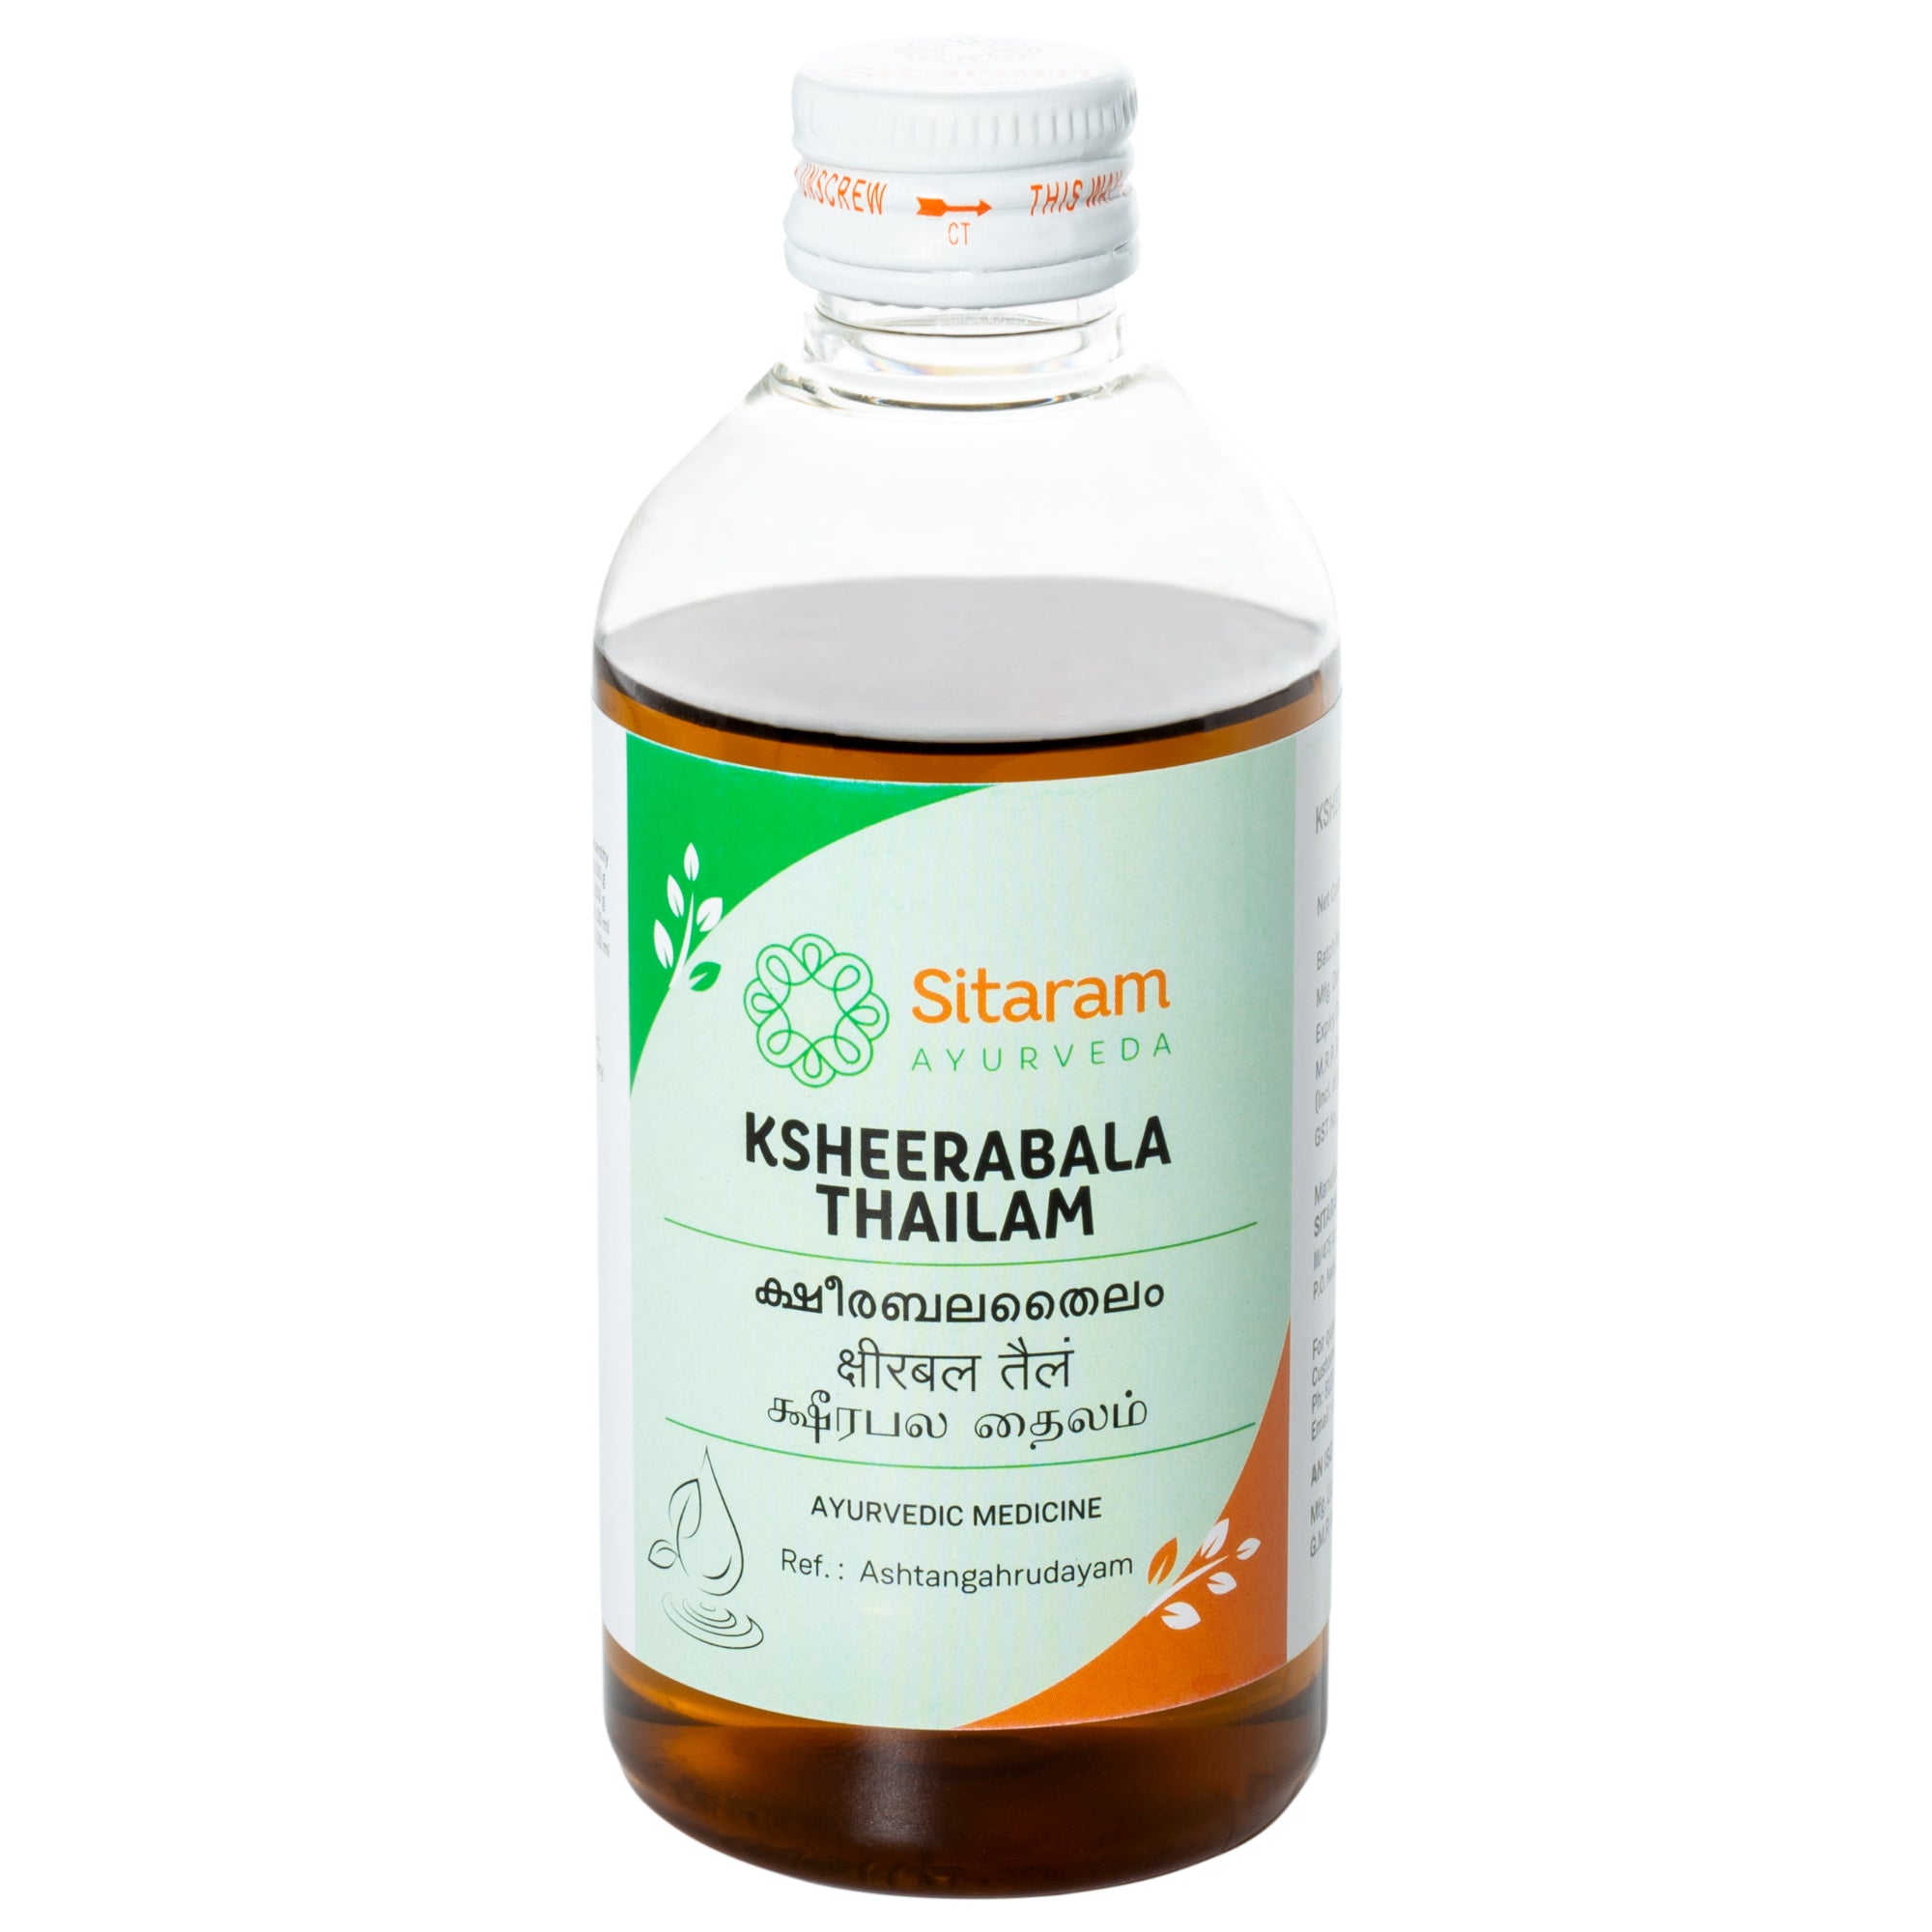 Sitaram Ayurveda Ksheerabala Thailam 200Ml (Prescription Medication)